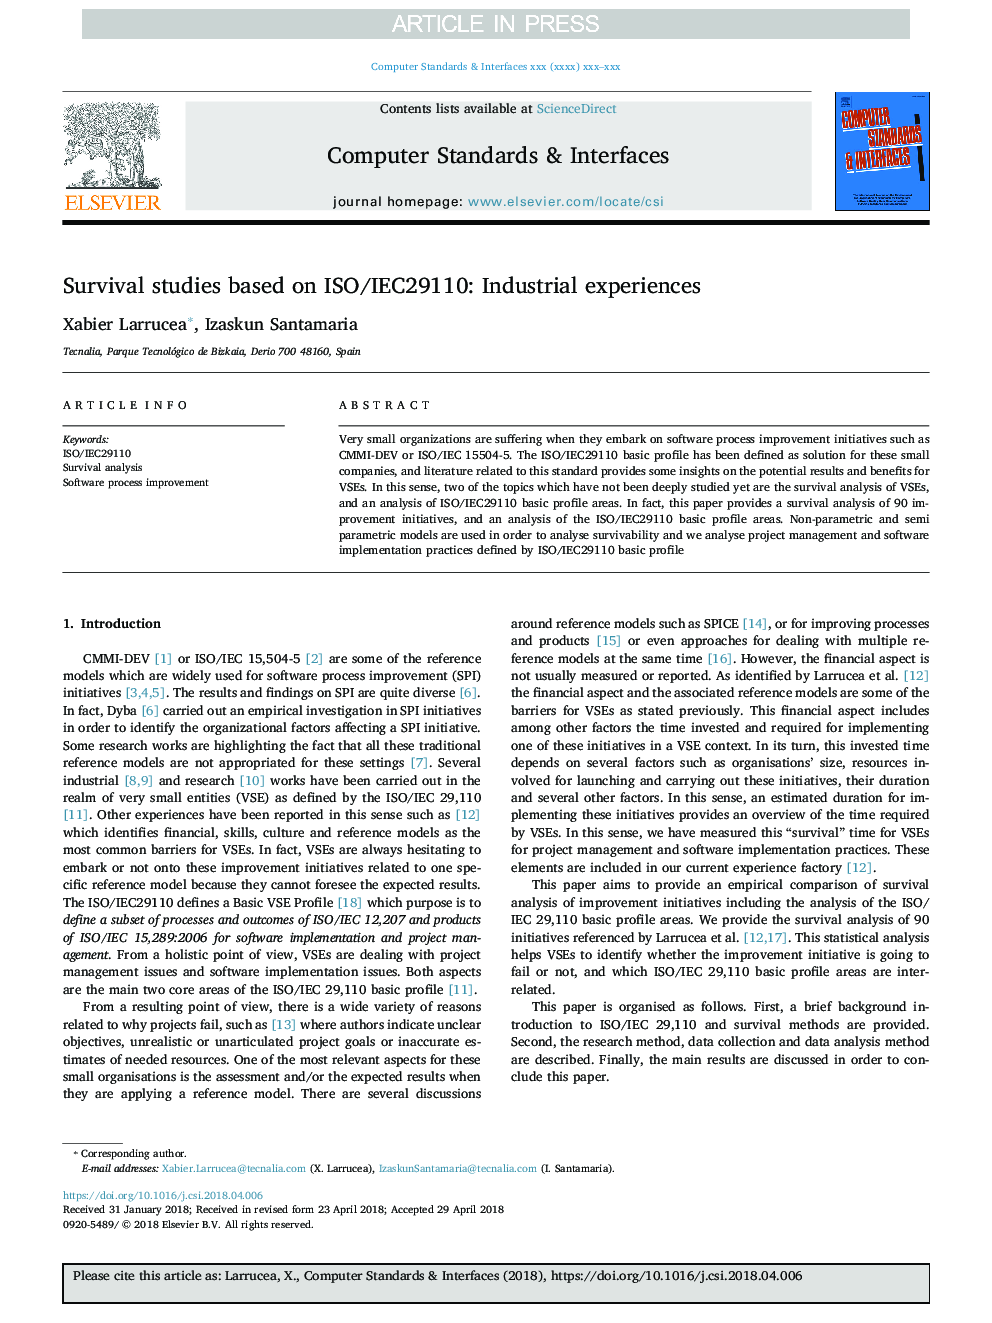 Survival studies based on ISO/IEC29110: Industrial experiences